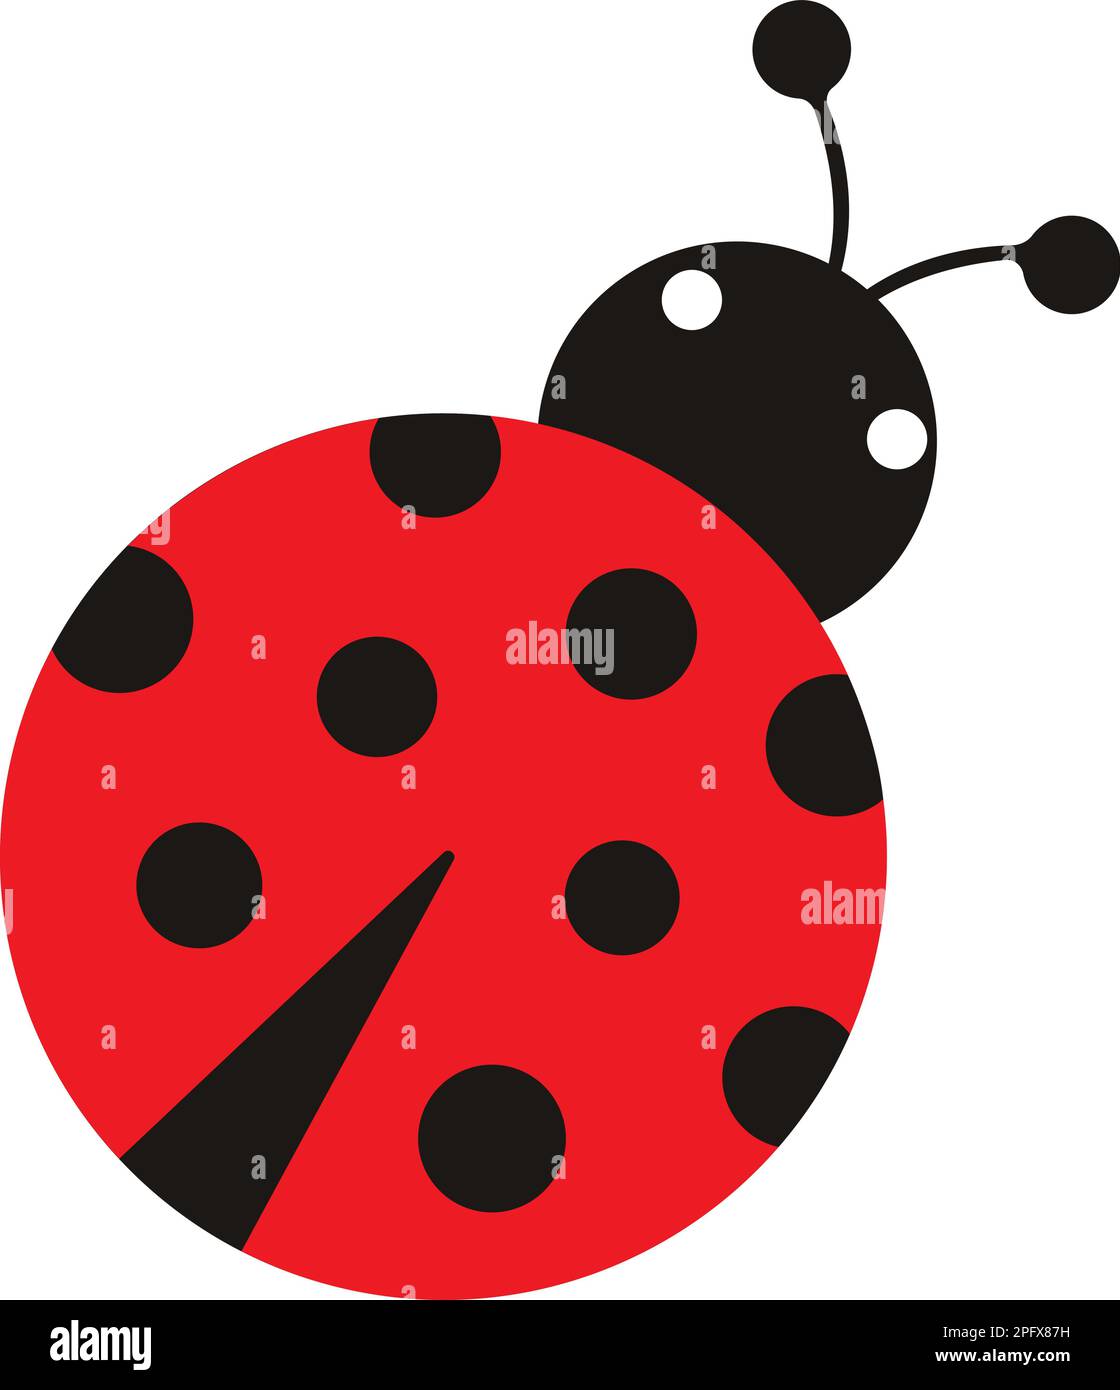 Free Vector  Flat design creative ladybug pattern